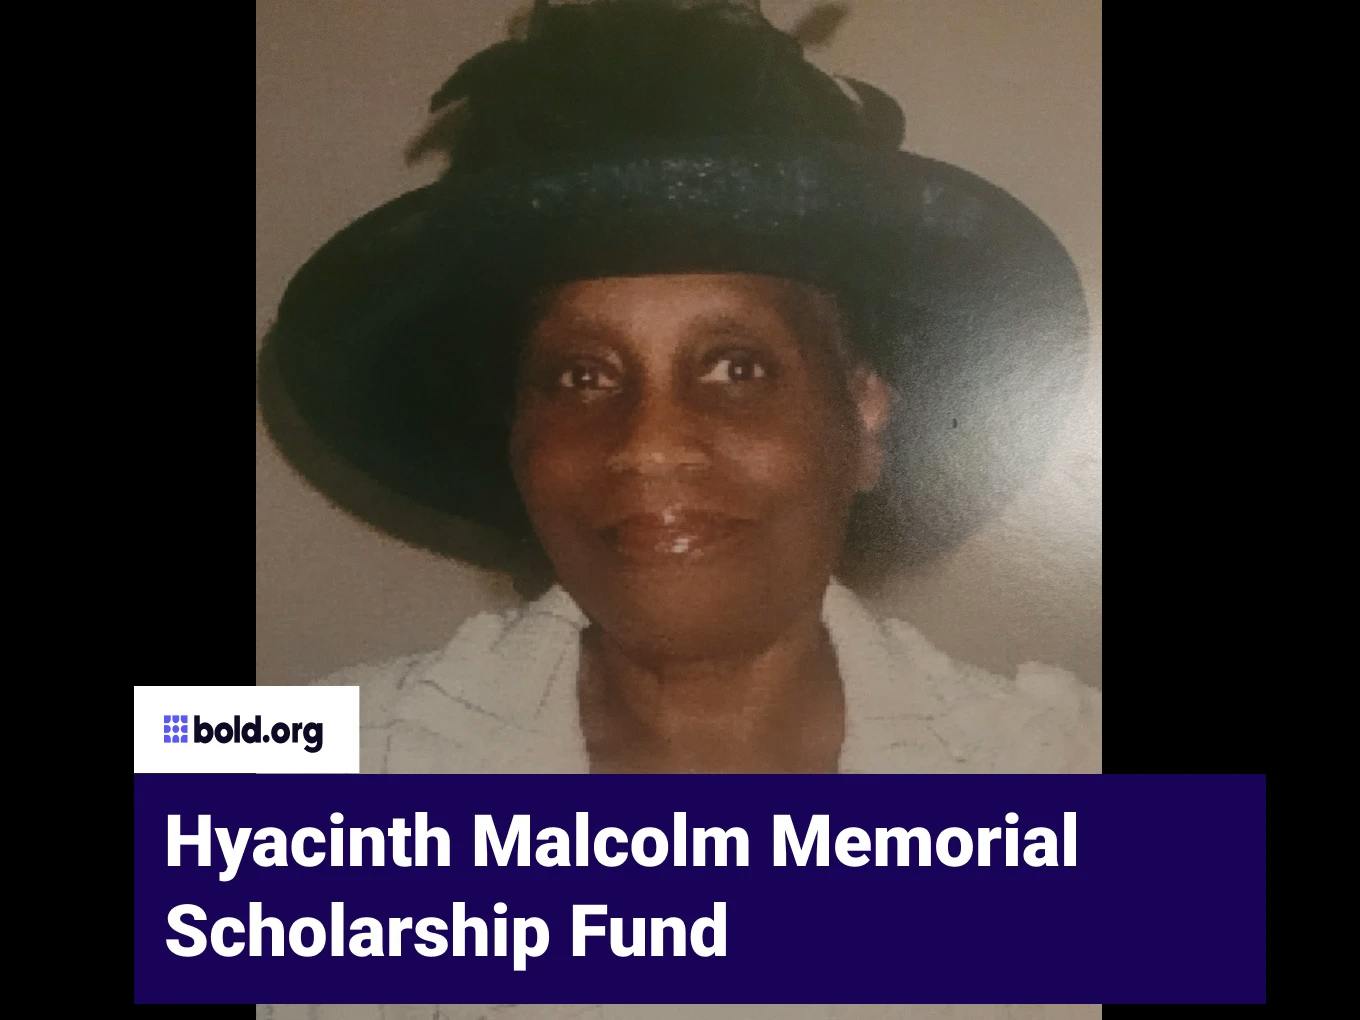 Hyacinth Malcolm Memorial Scholarship Fund